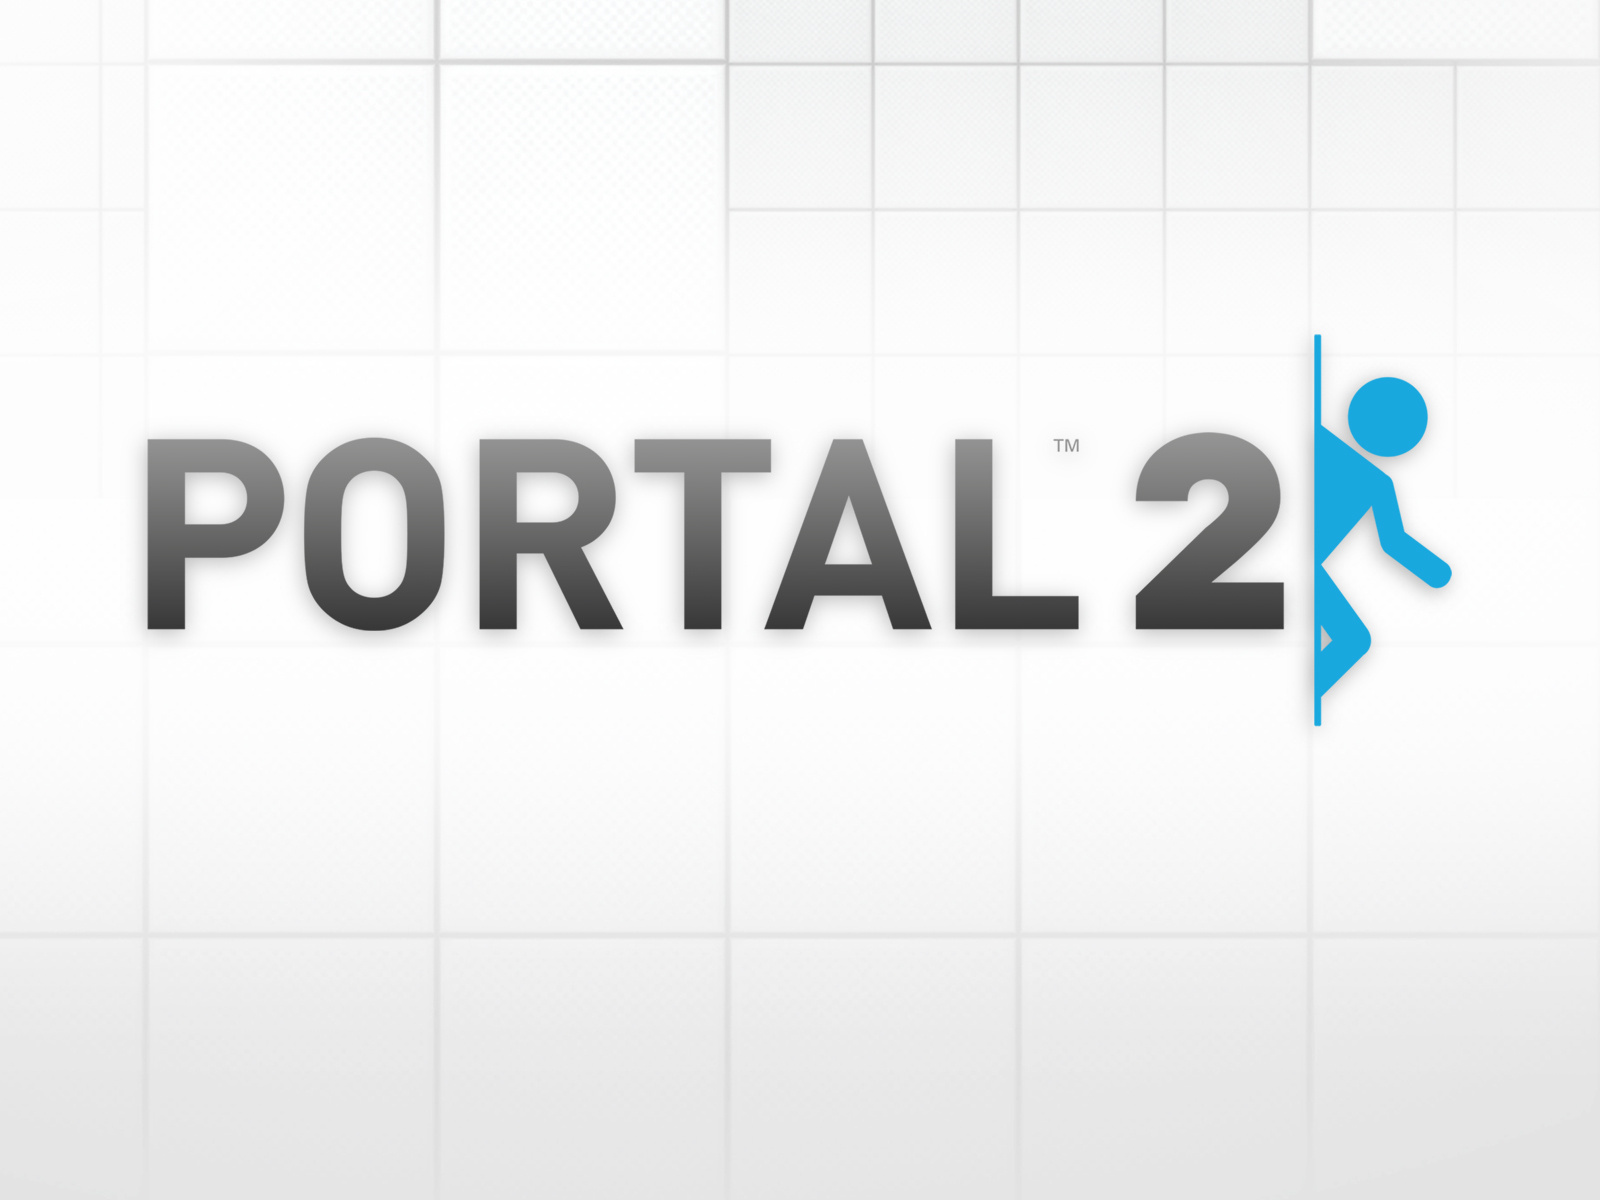 Portal 2 (Steam Аккаунт)